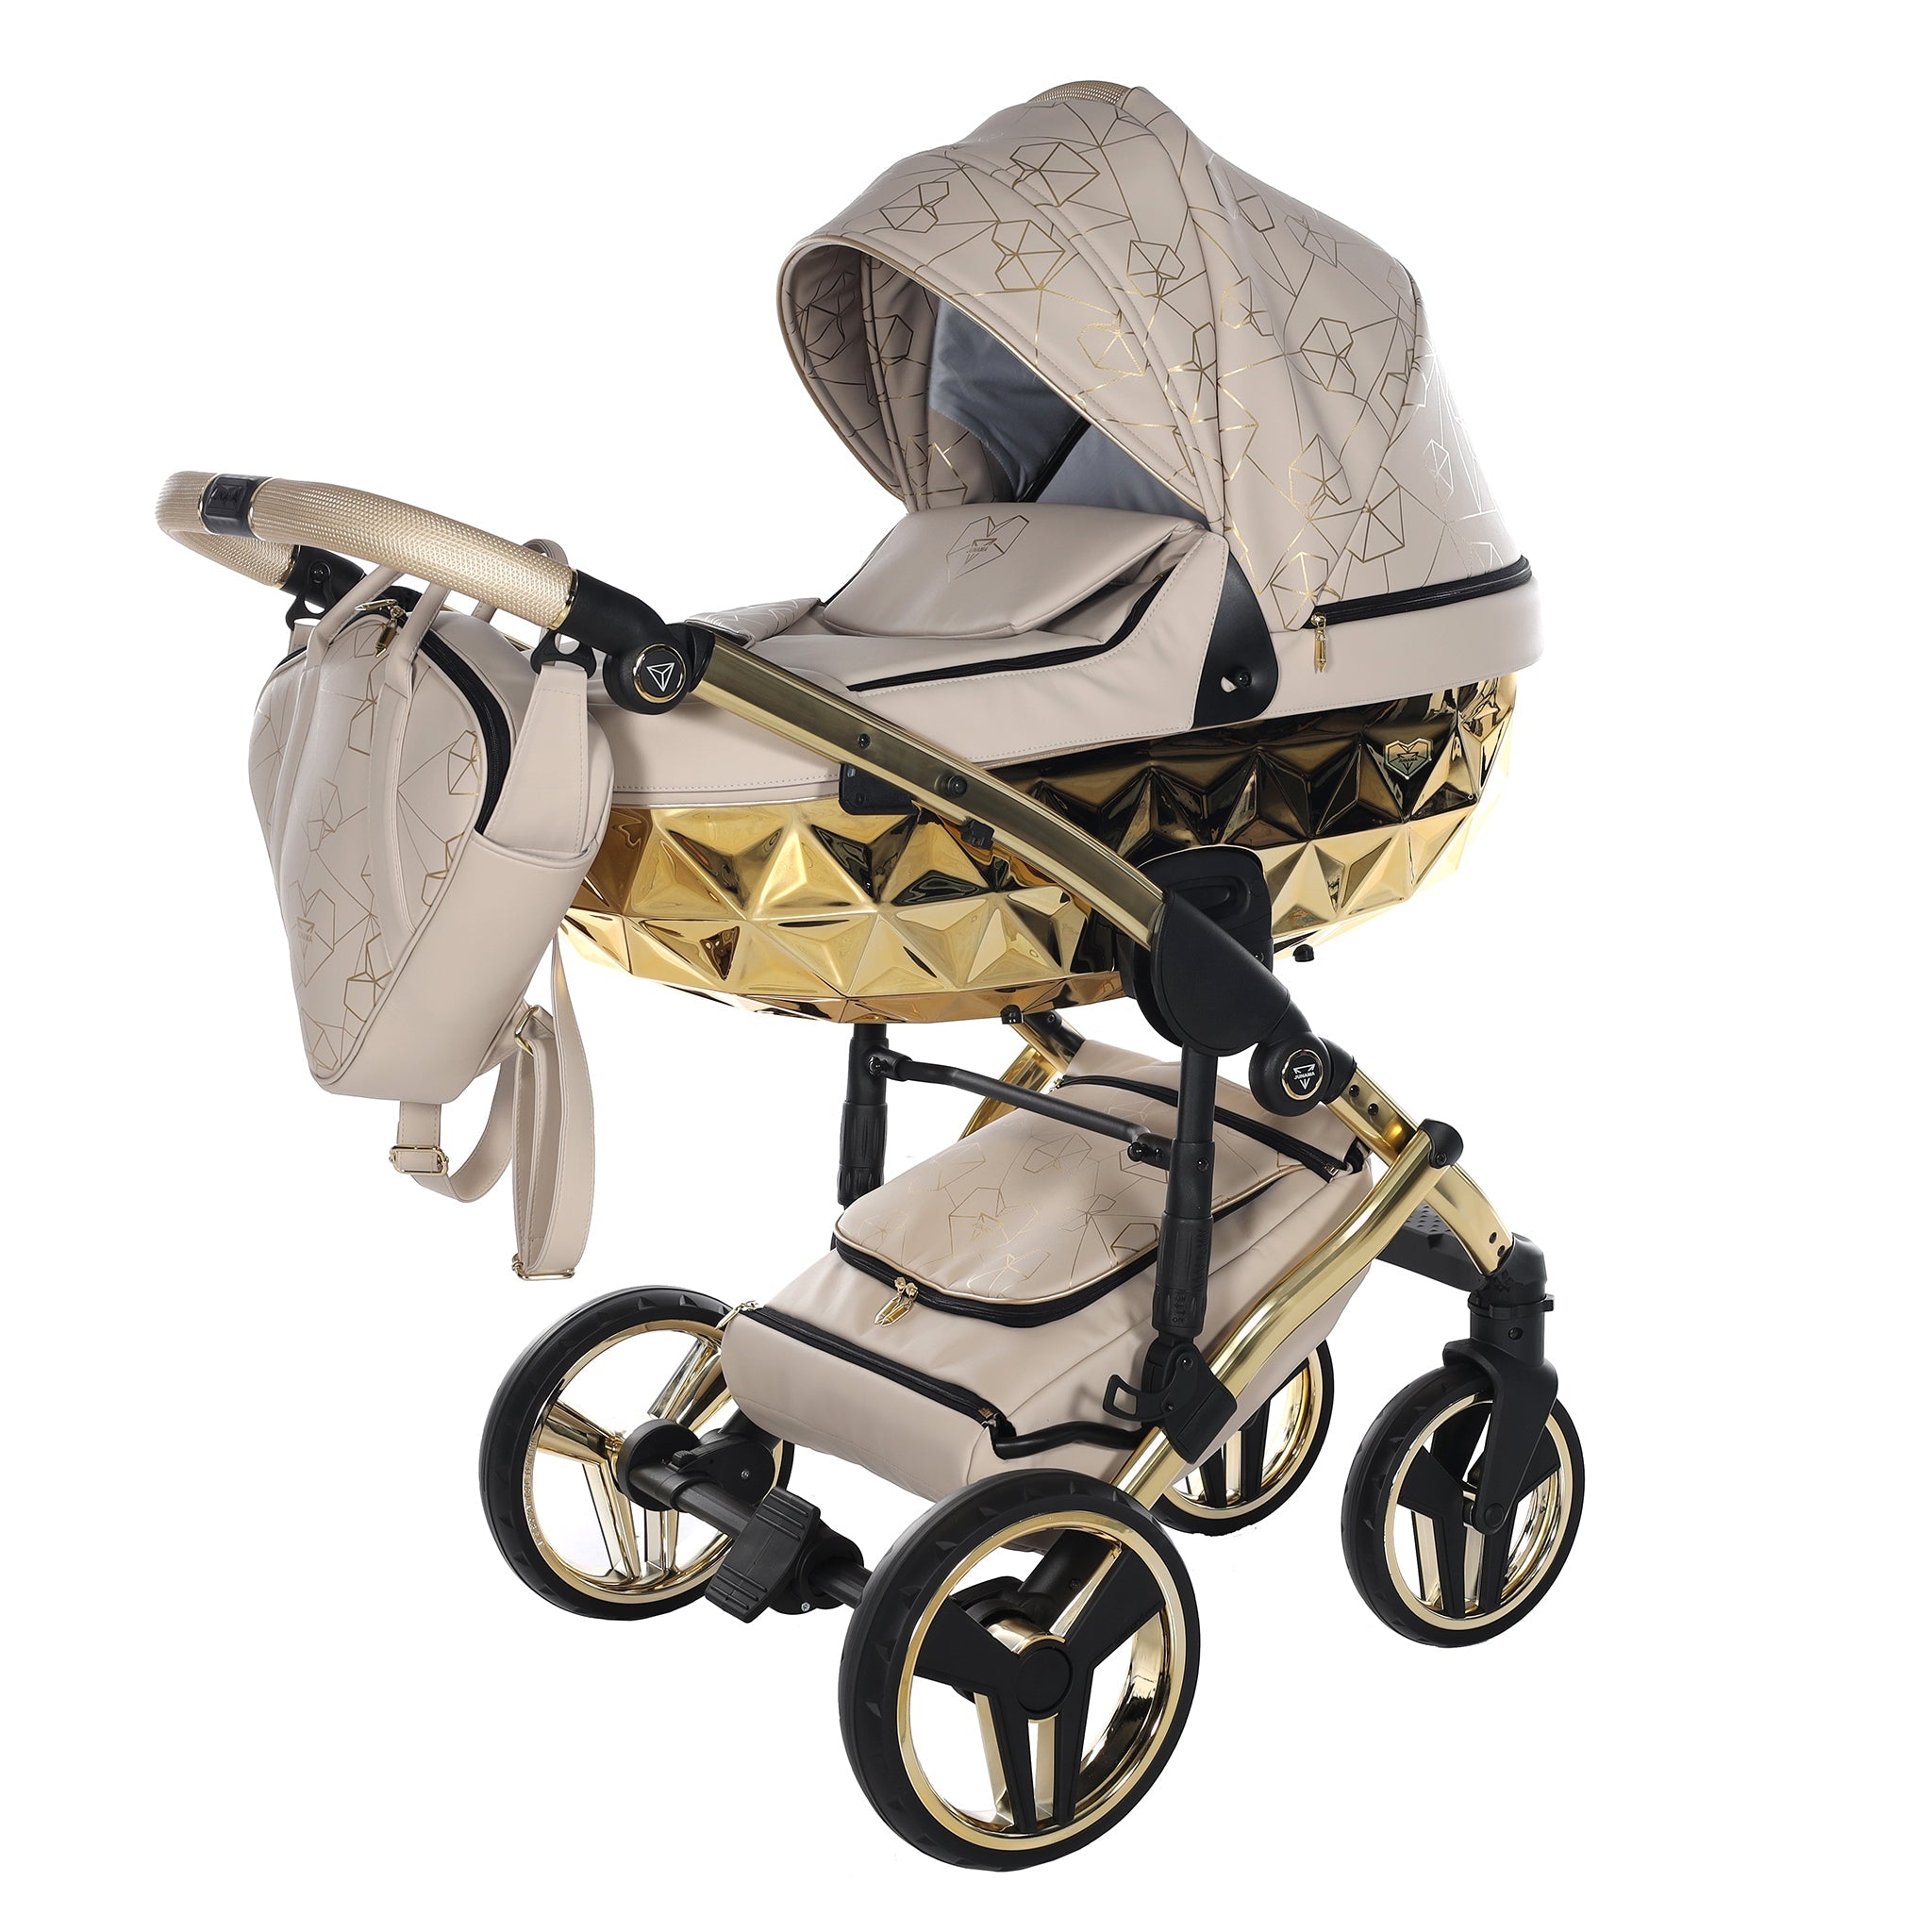 Junama Heart, baby prams or stroller 2 in 1 - Beige and Gold, Code number: JUNHERT07